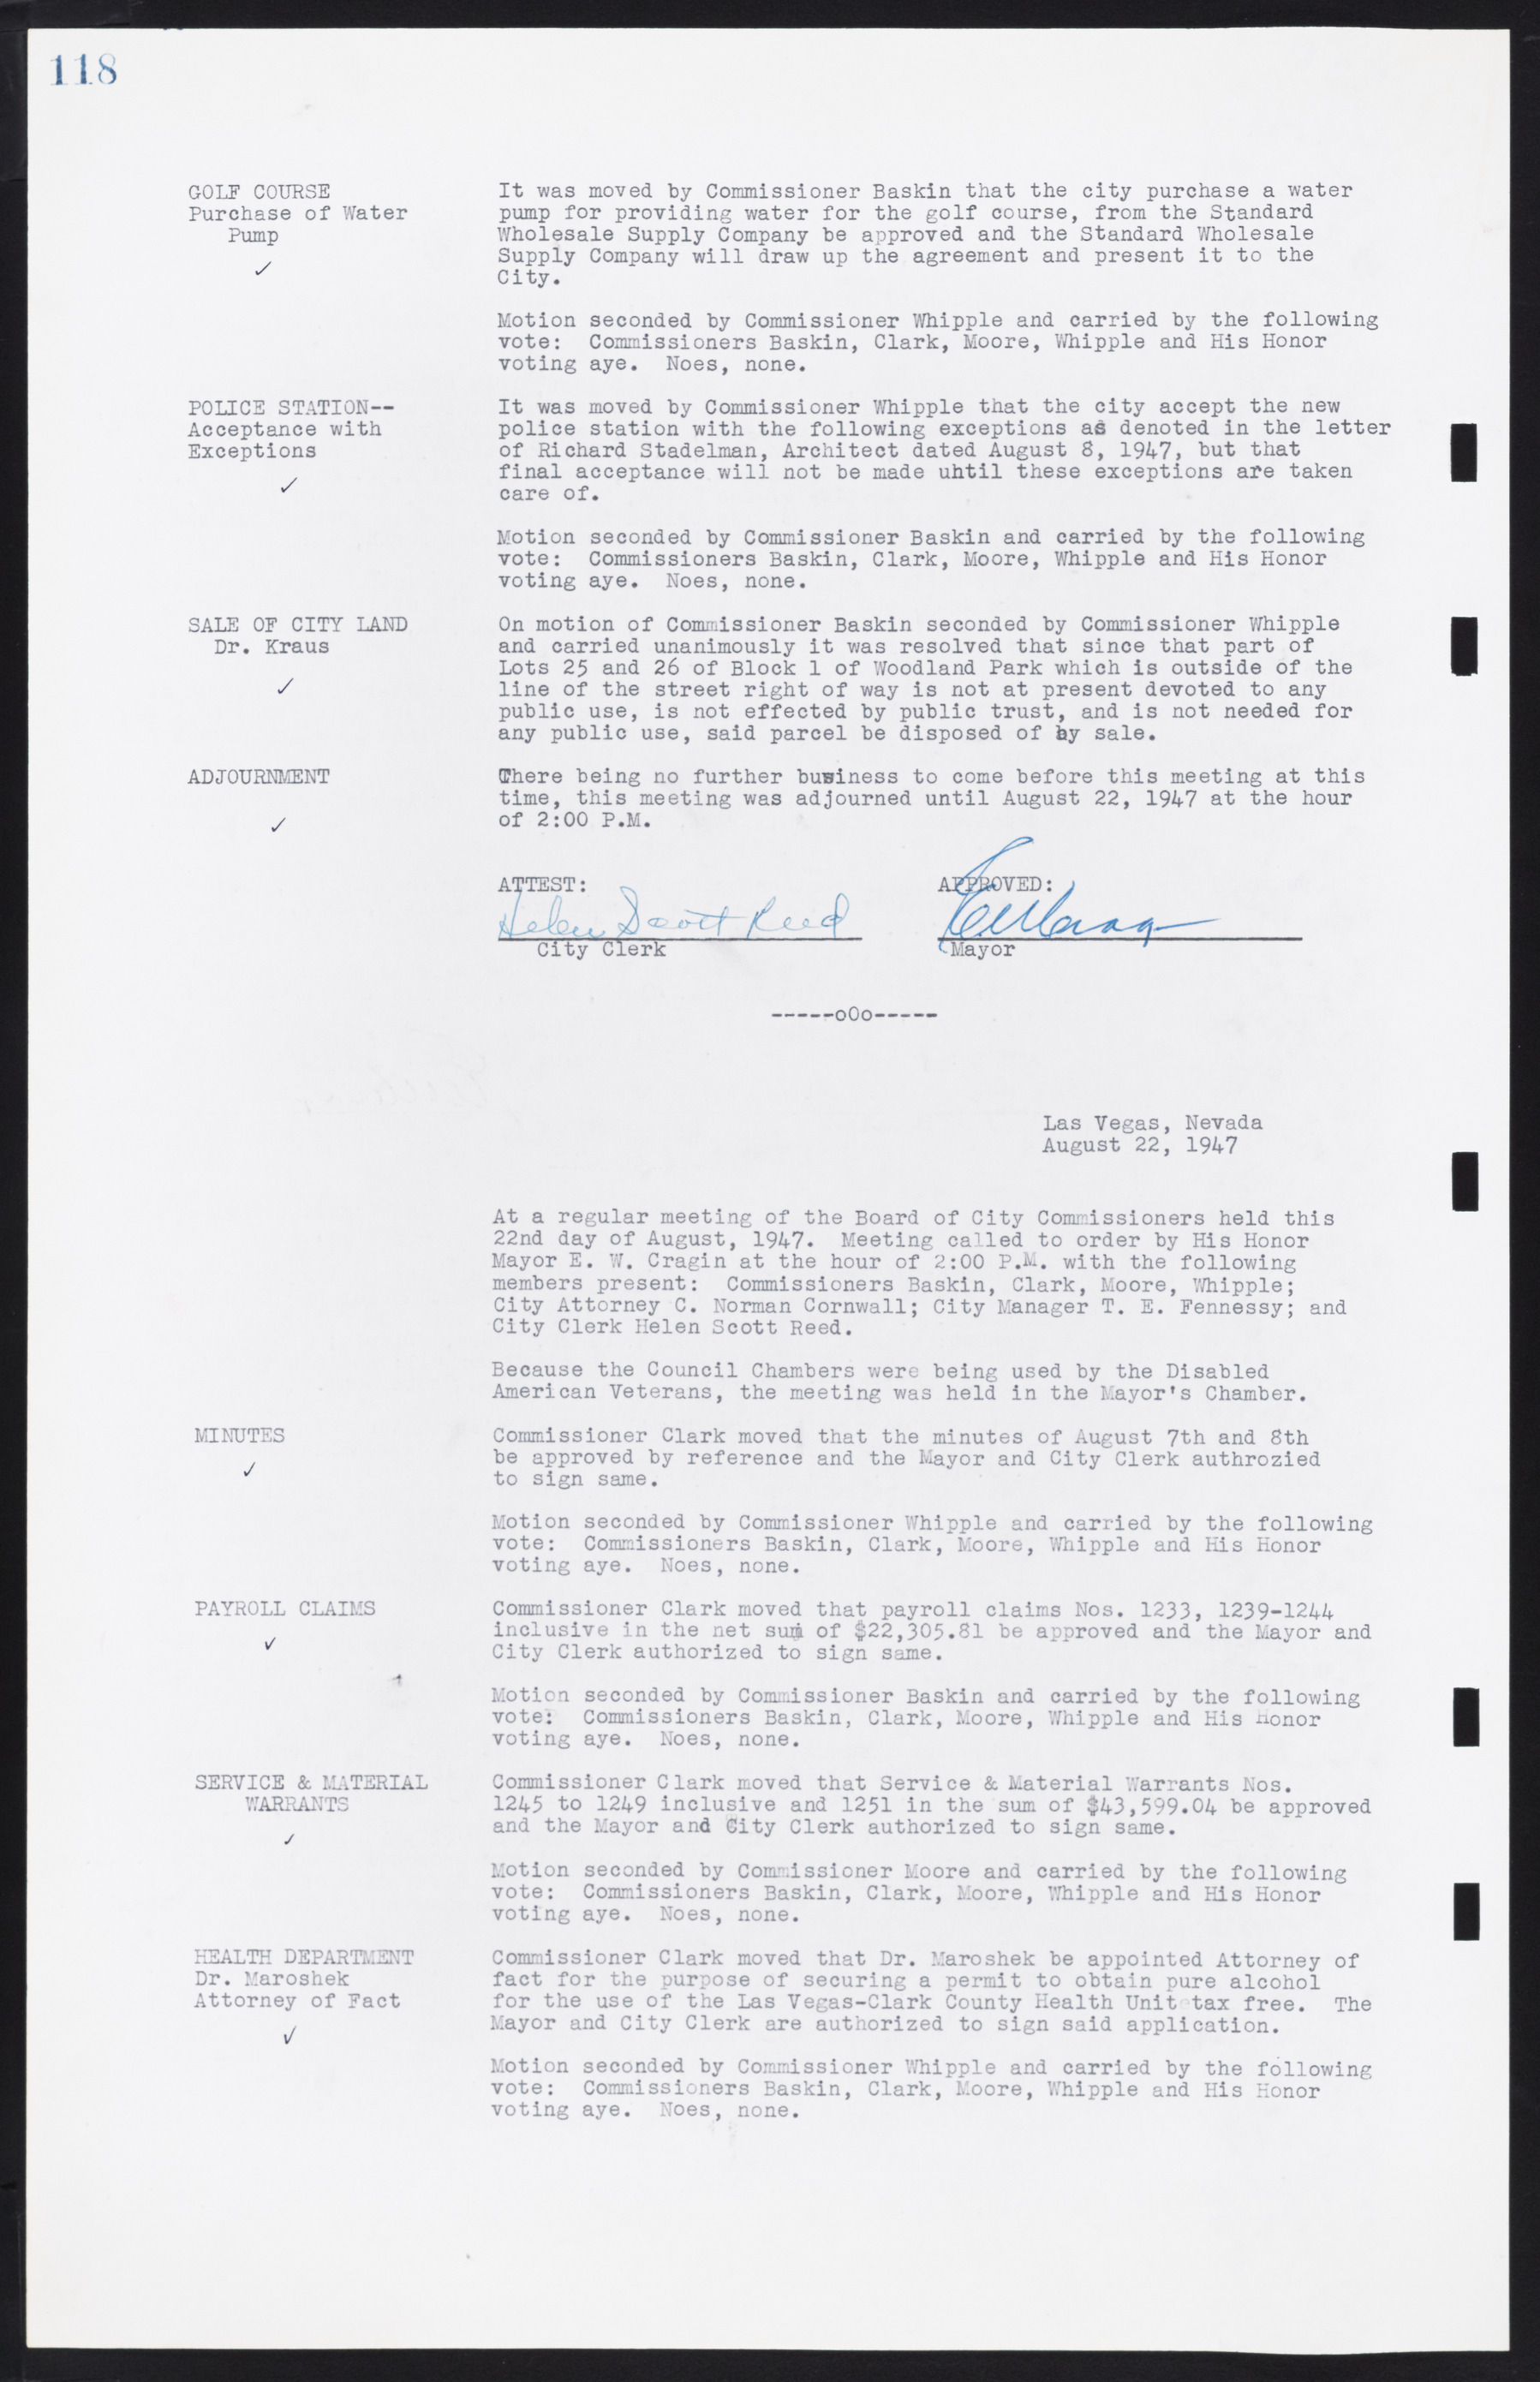 Las Vegas City Commission Minutes, January 7, 1947 to October 26, 1949, lvc000006-136